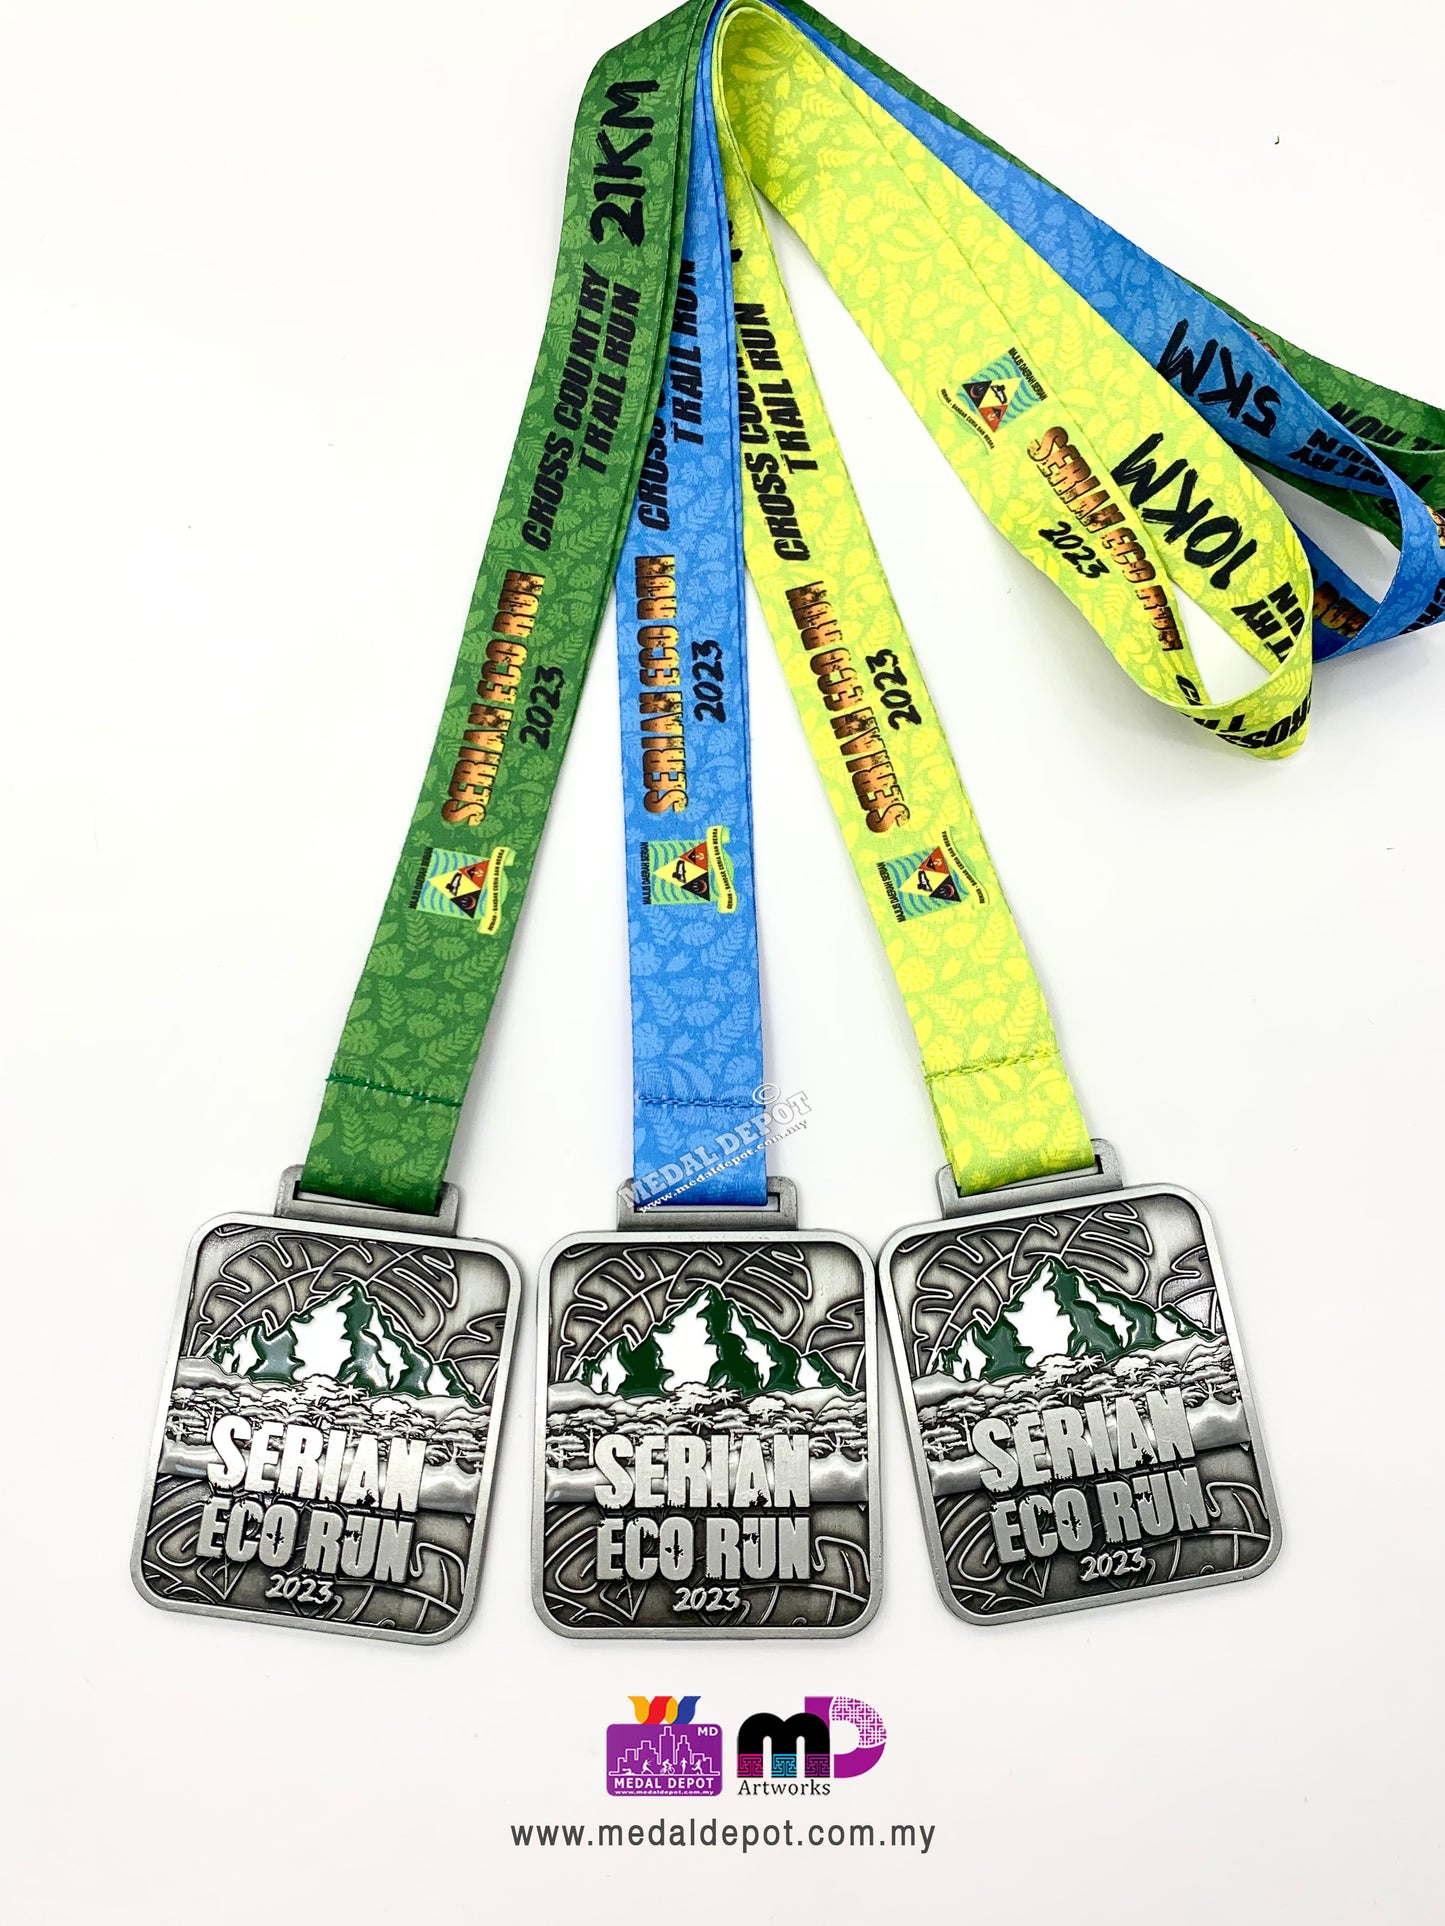 Serian Eco Run 2023 medal